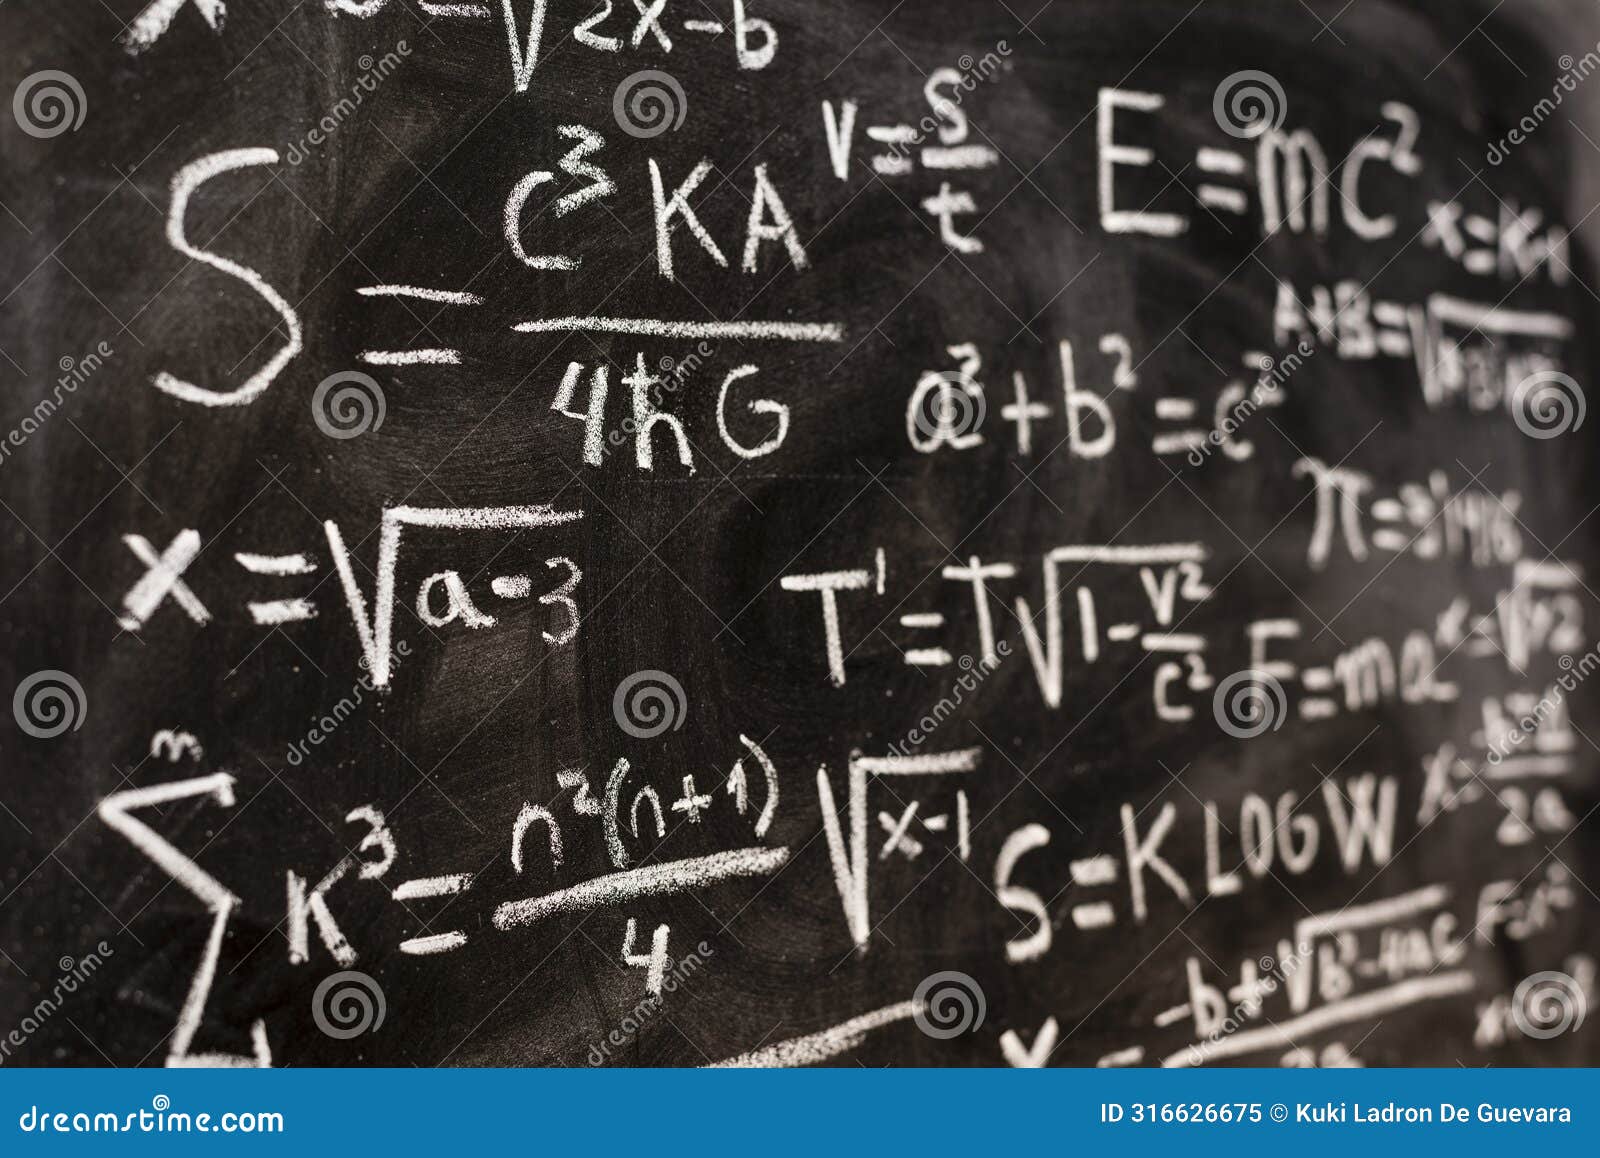 mathematical equations and physics formulas handwritten on blackboard